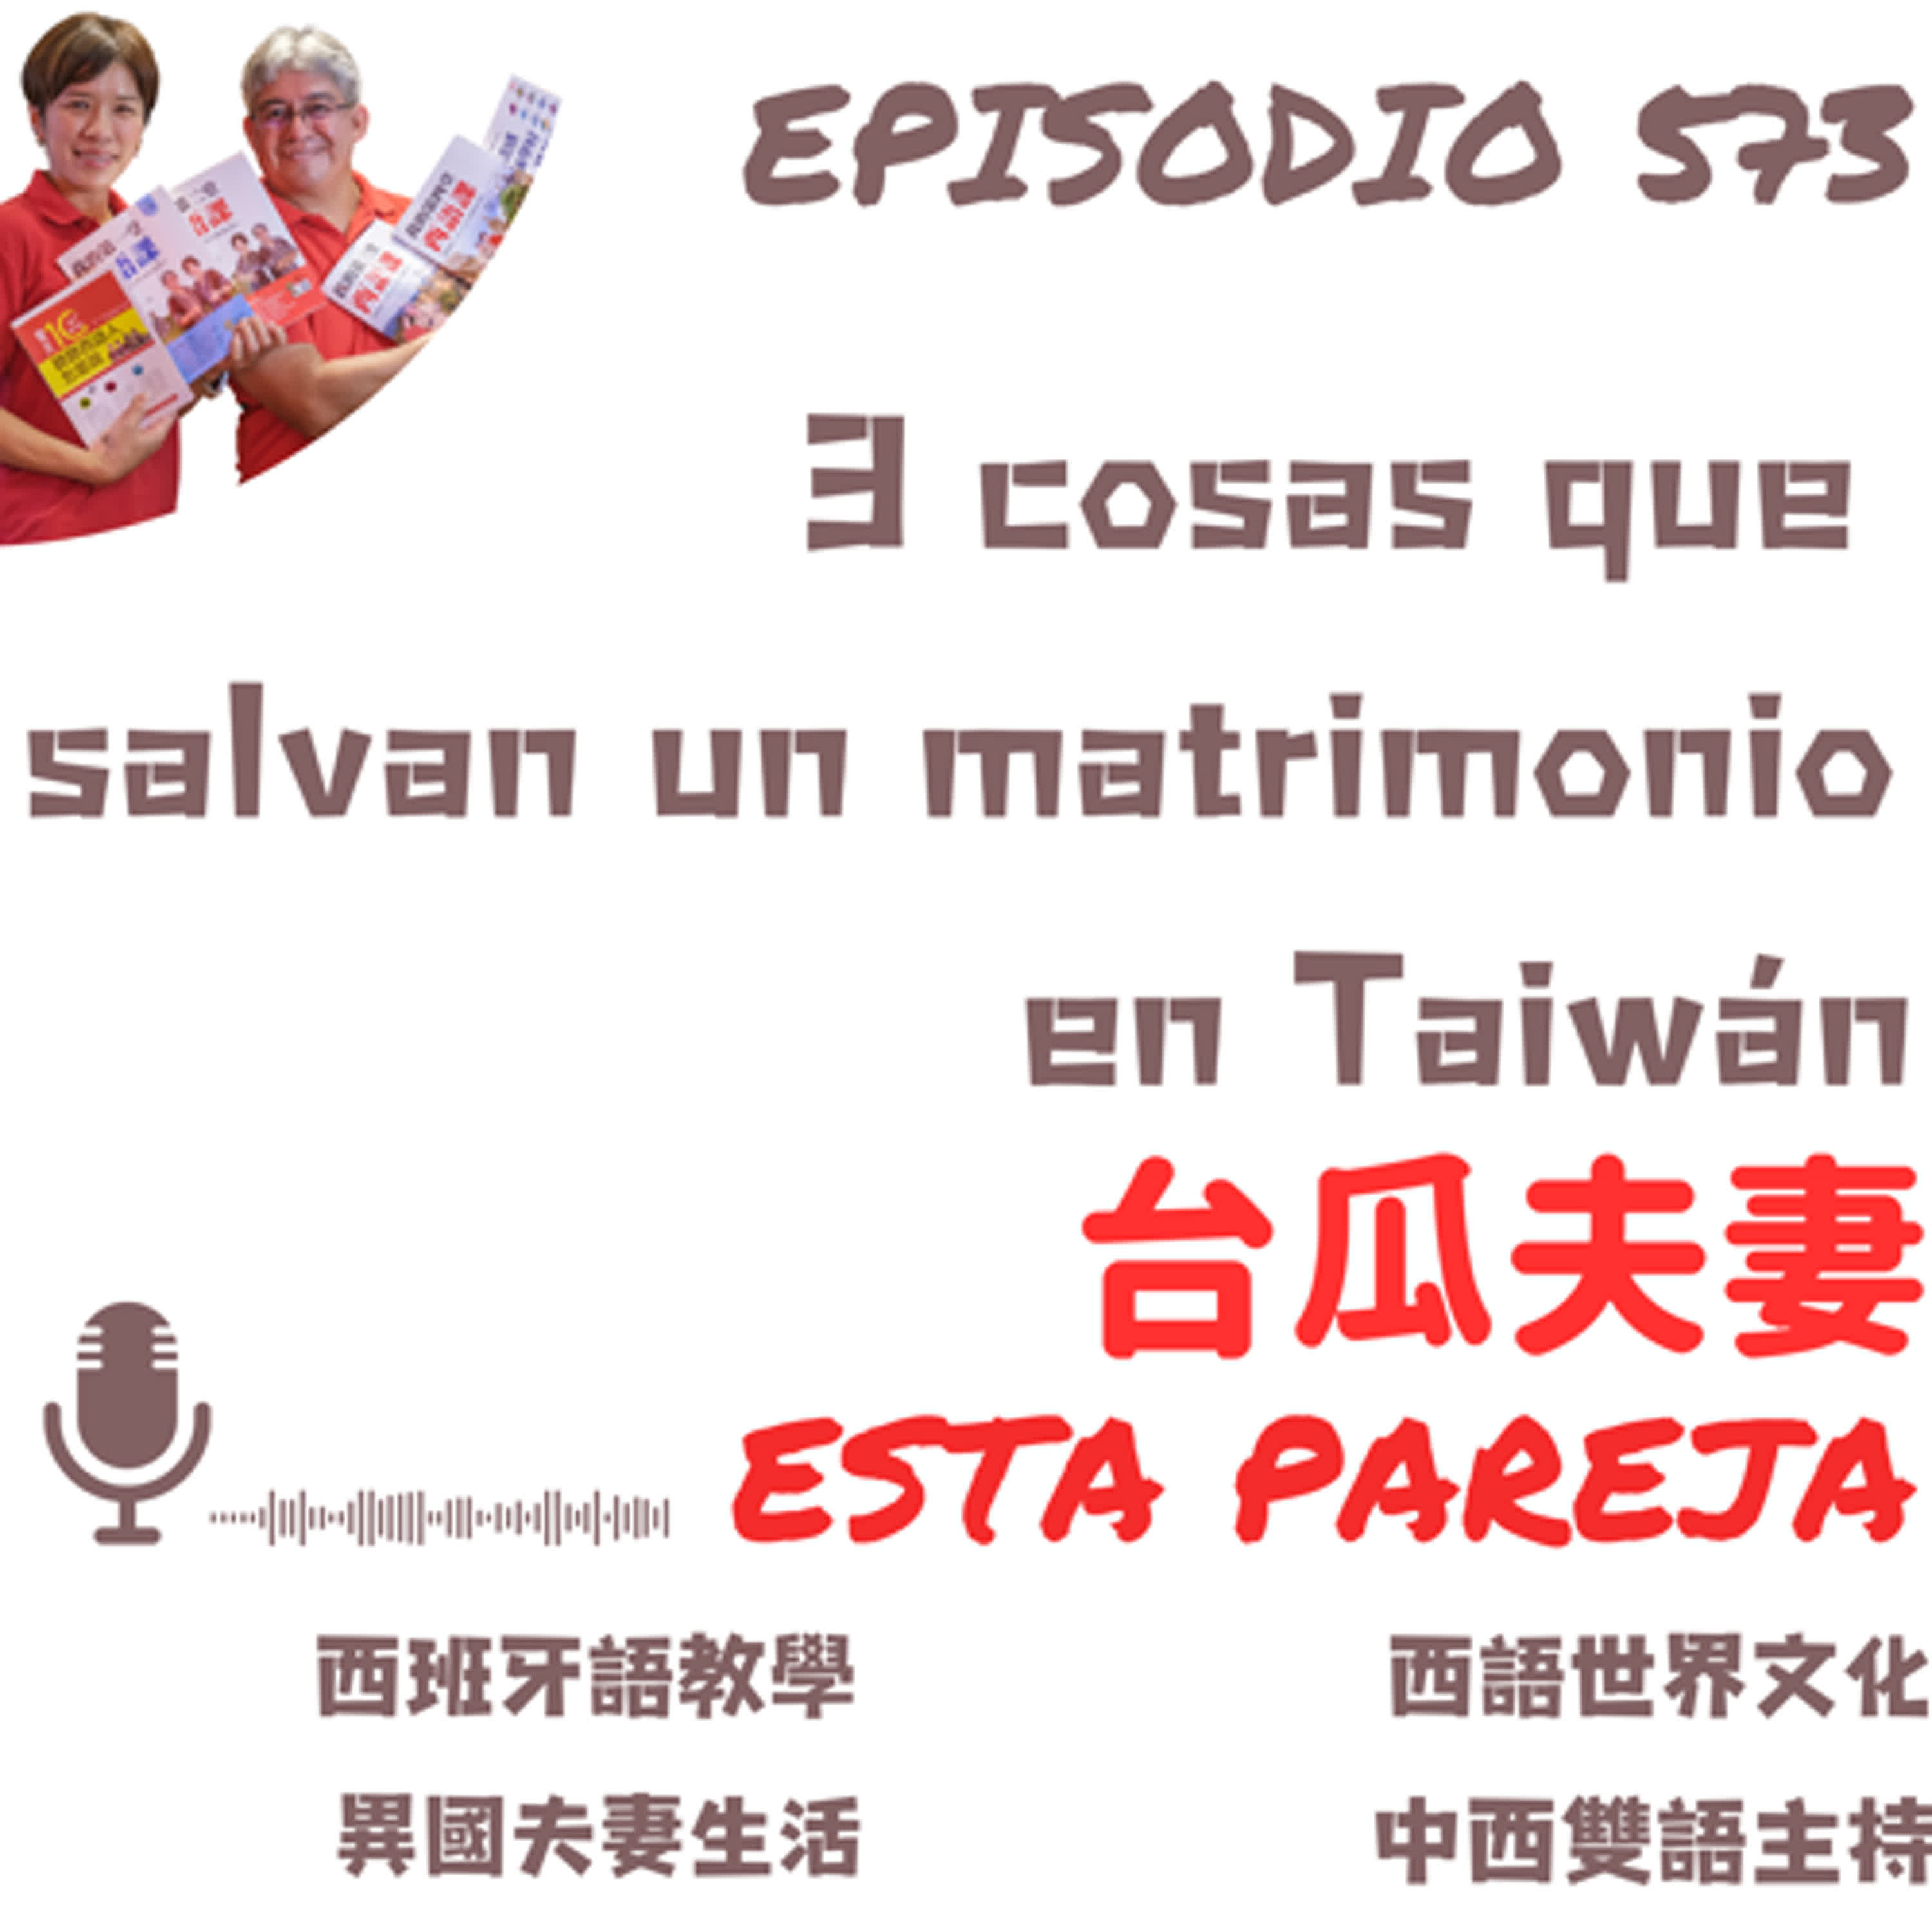 573. (B1-B2) 3 cosas que salvan un matrimonio en Taiwán